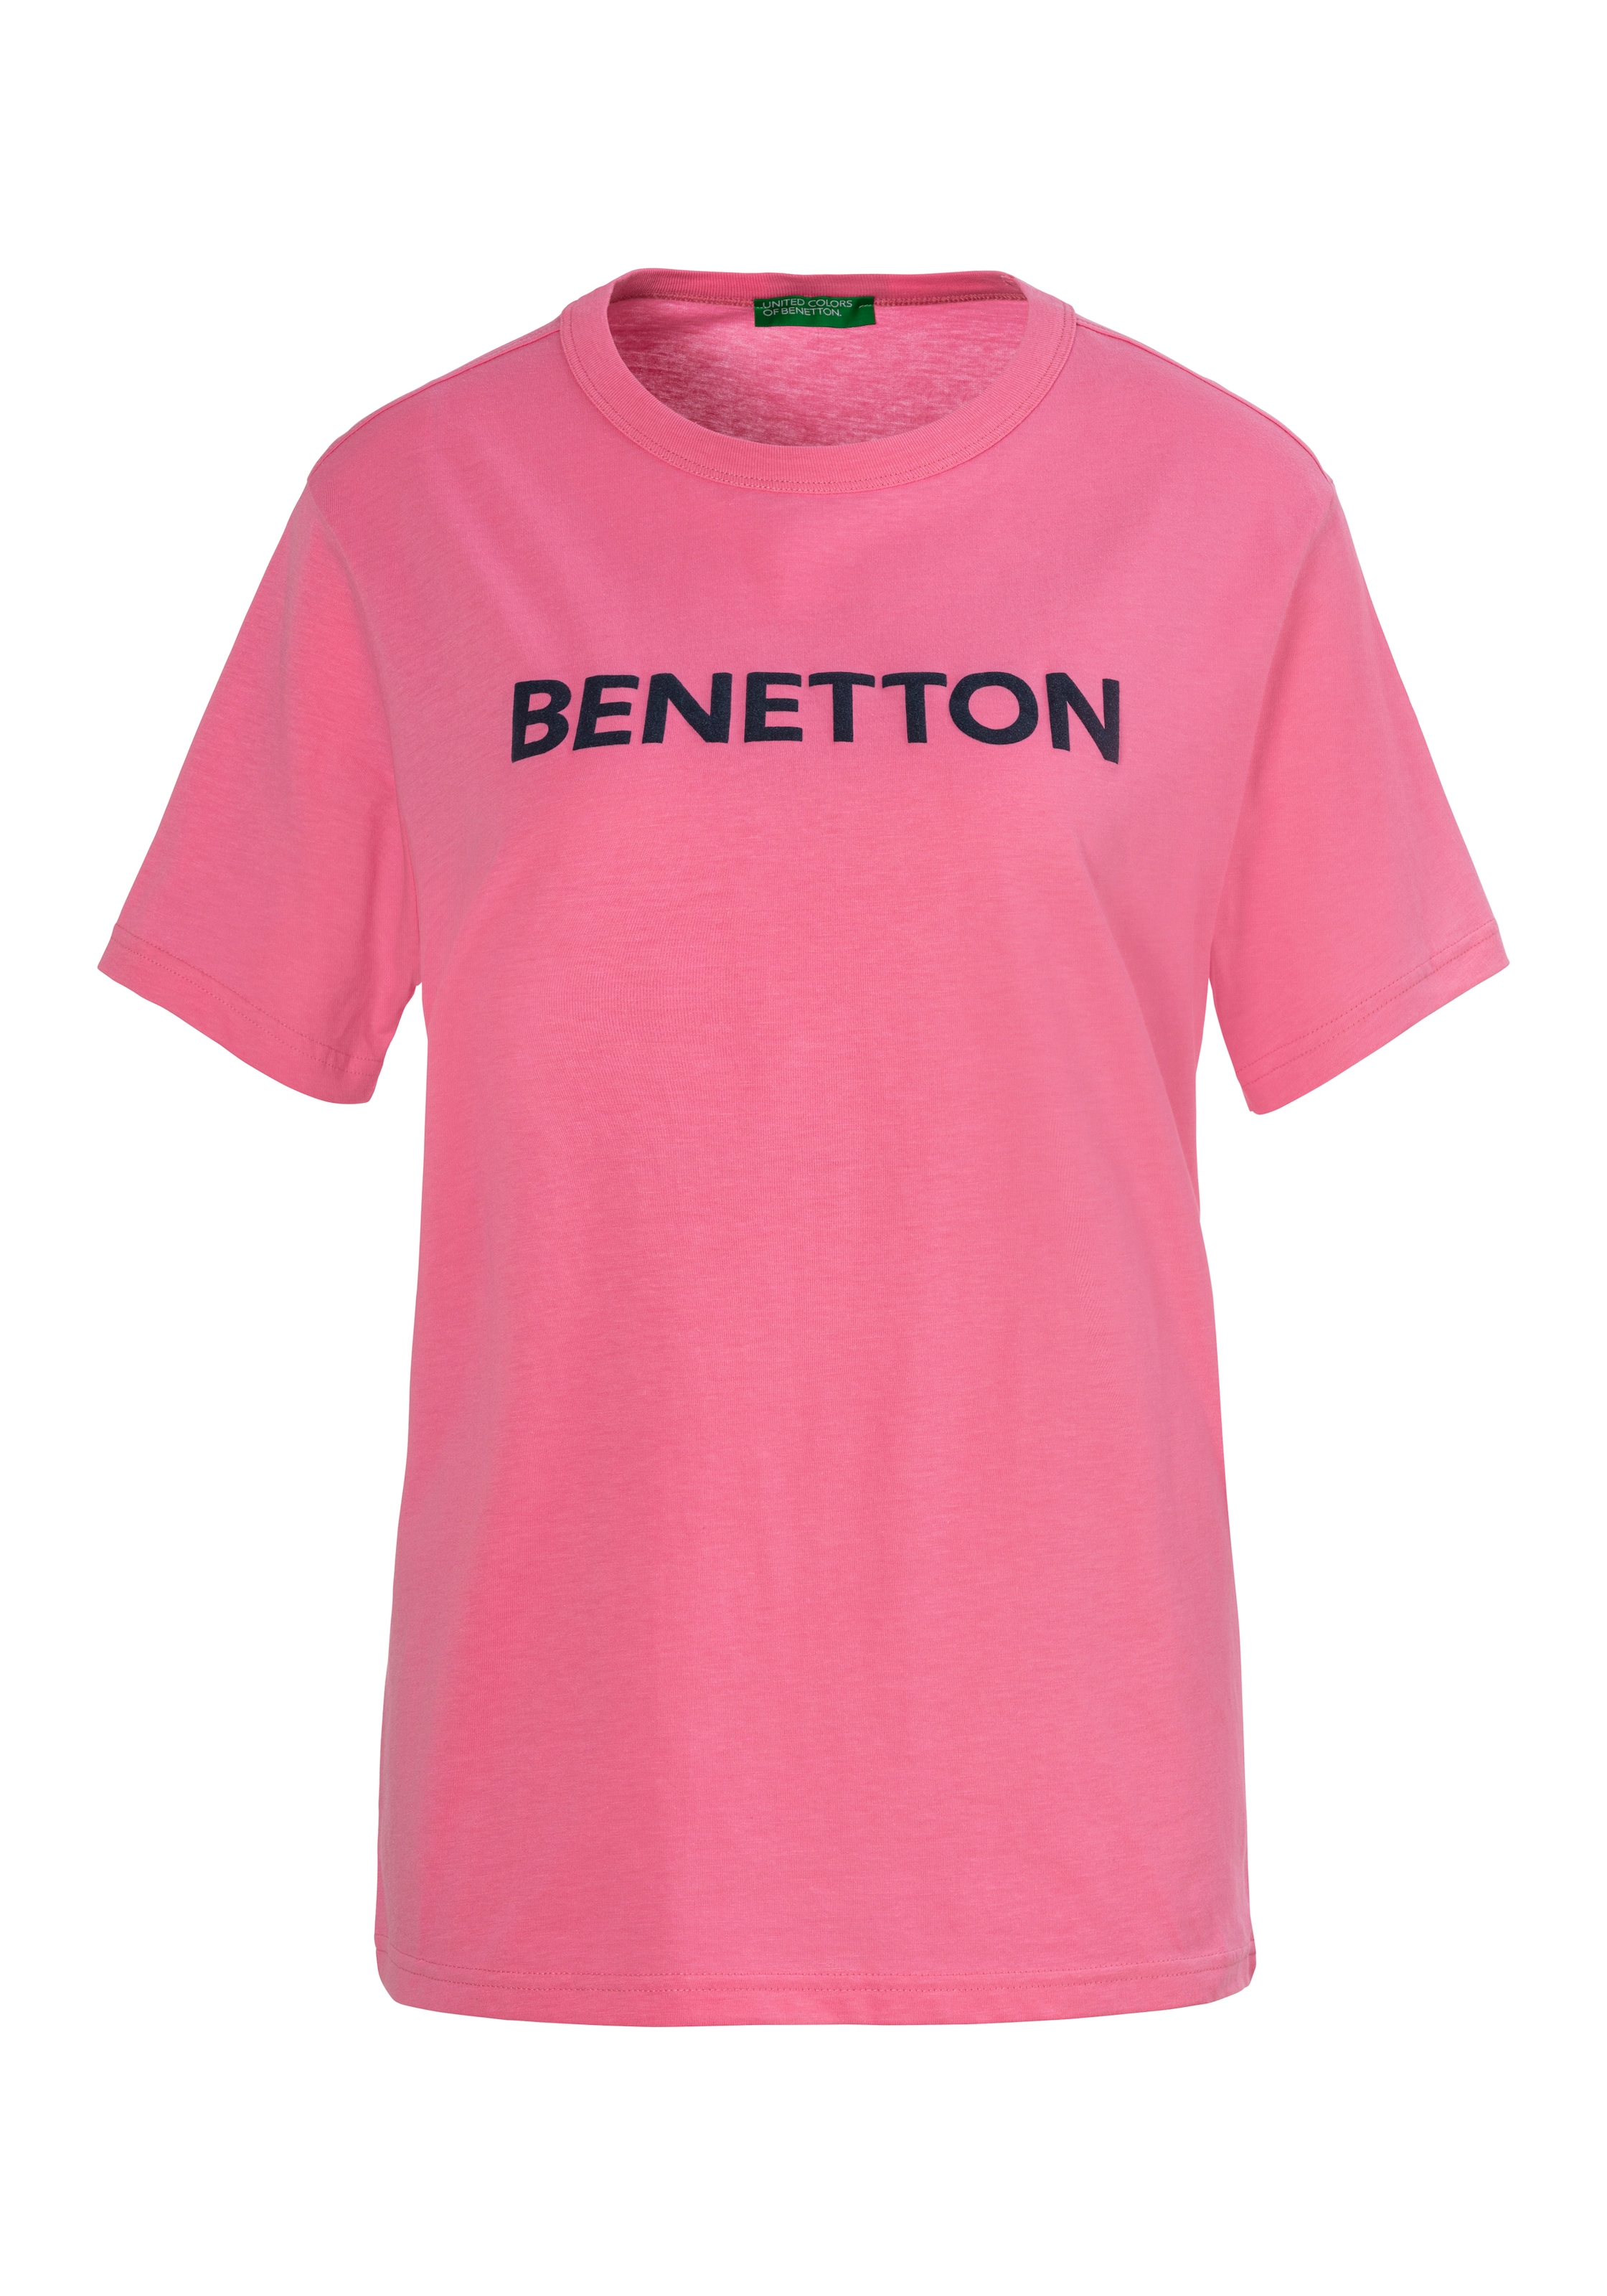 United Colors of Aufdruck Benetton mit T-Shirt, shoppen Benetton online